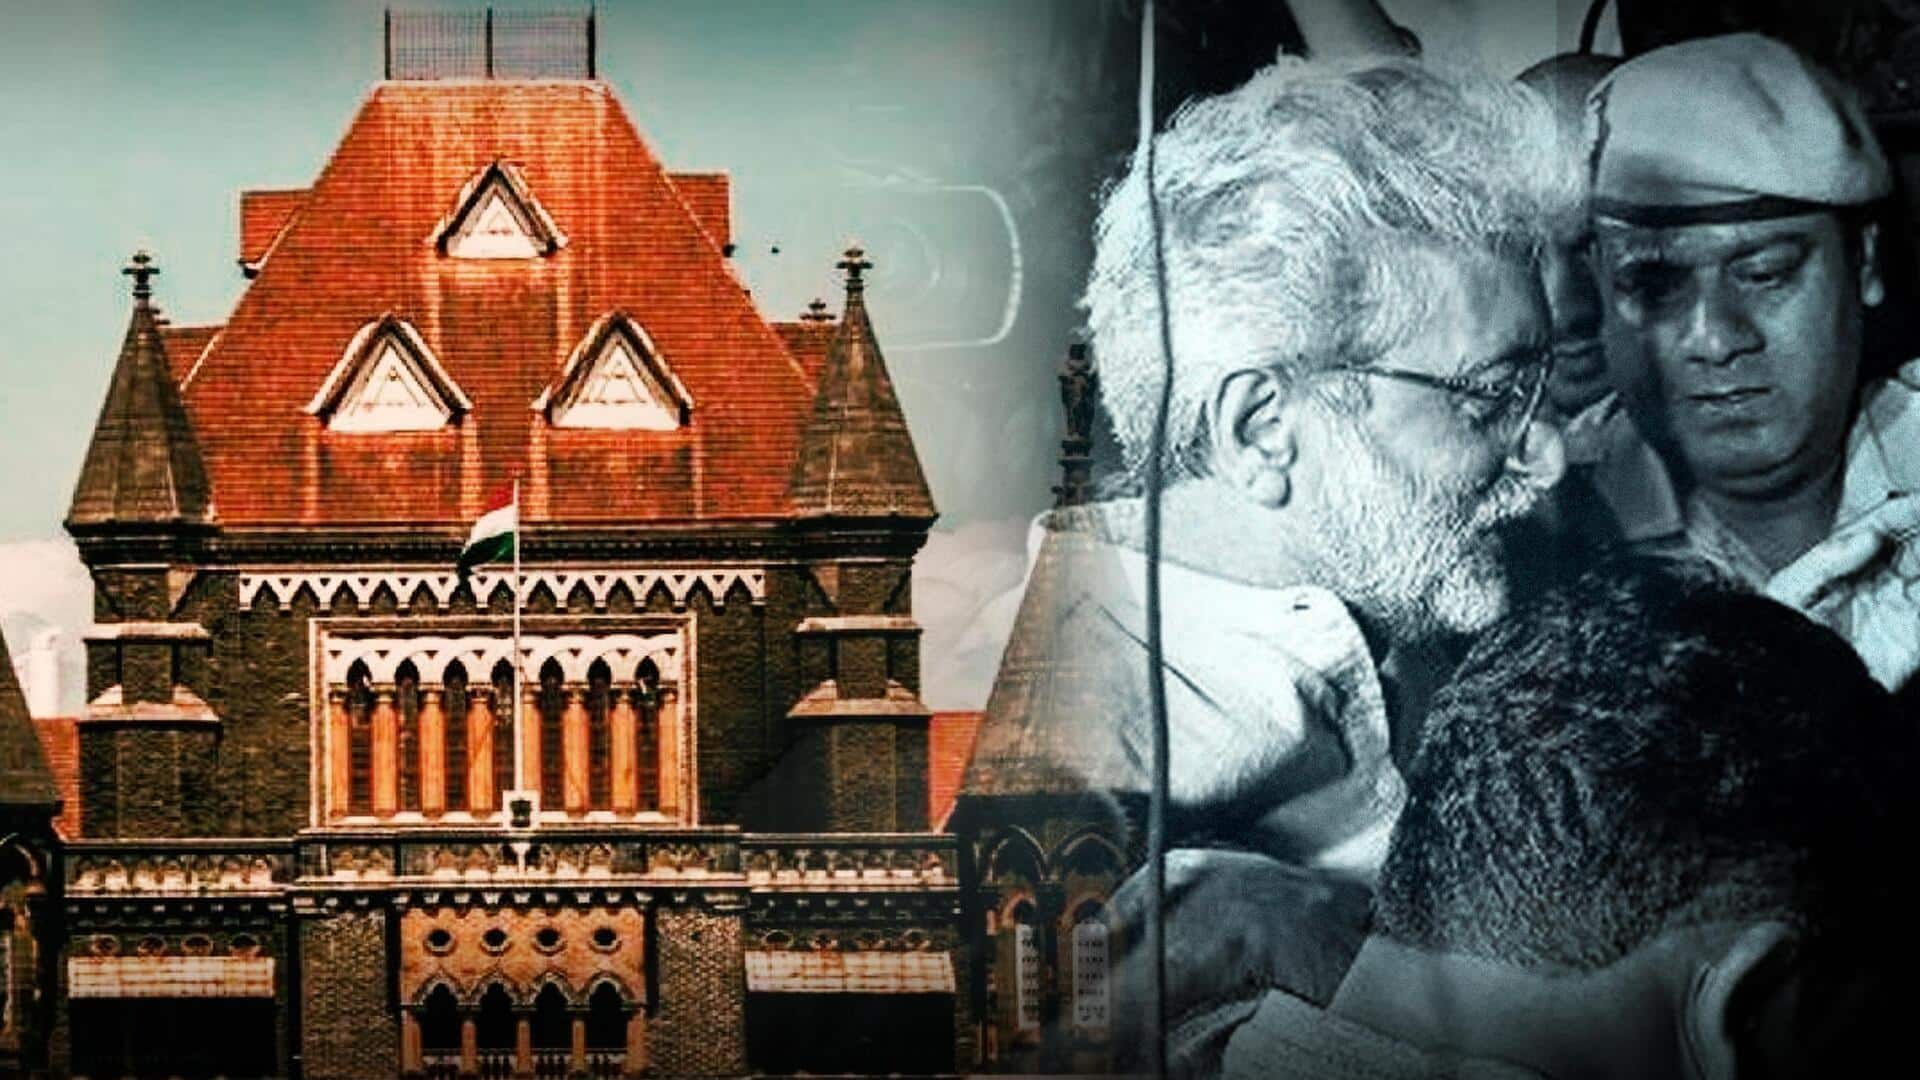 Elgar Parishad case: Bombay HC grants bail to Gautam Navlakha